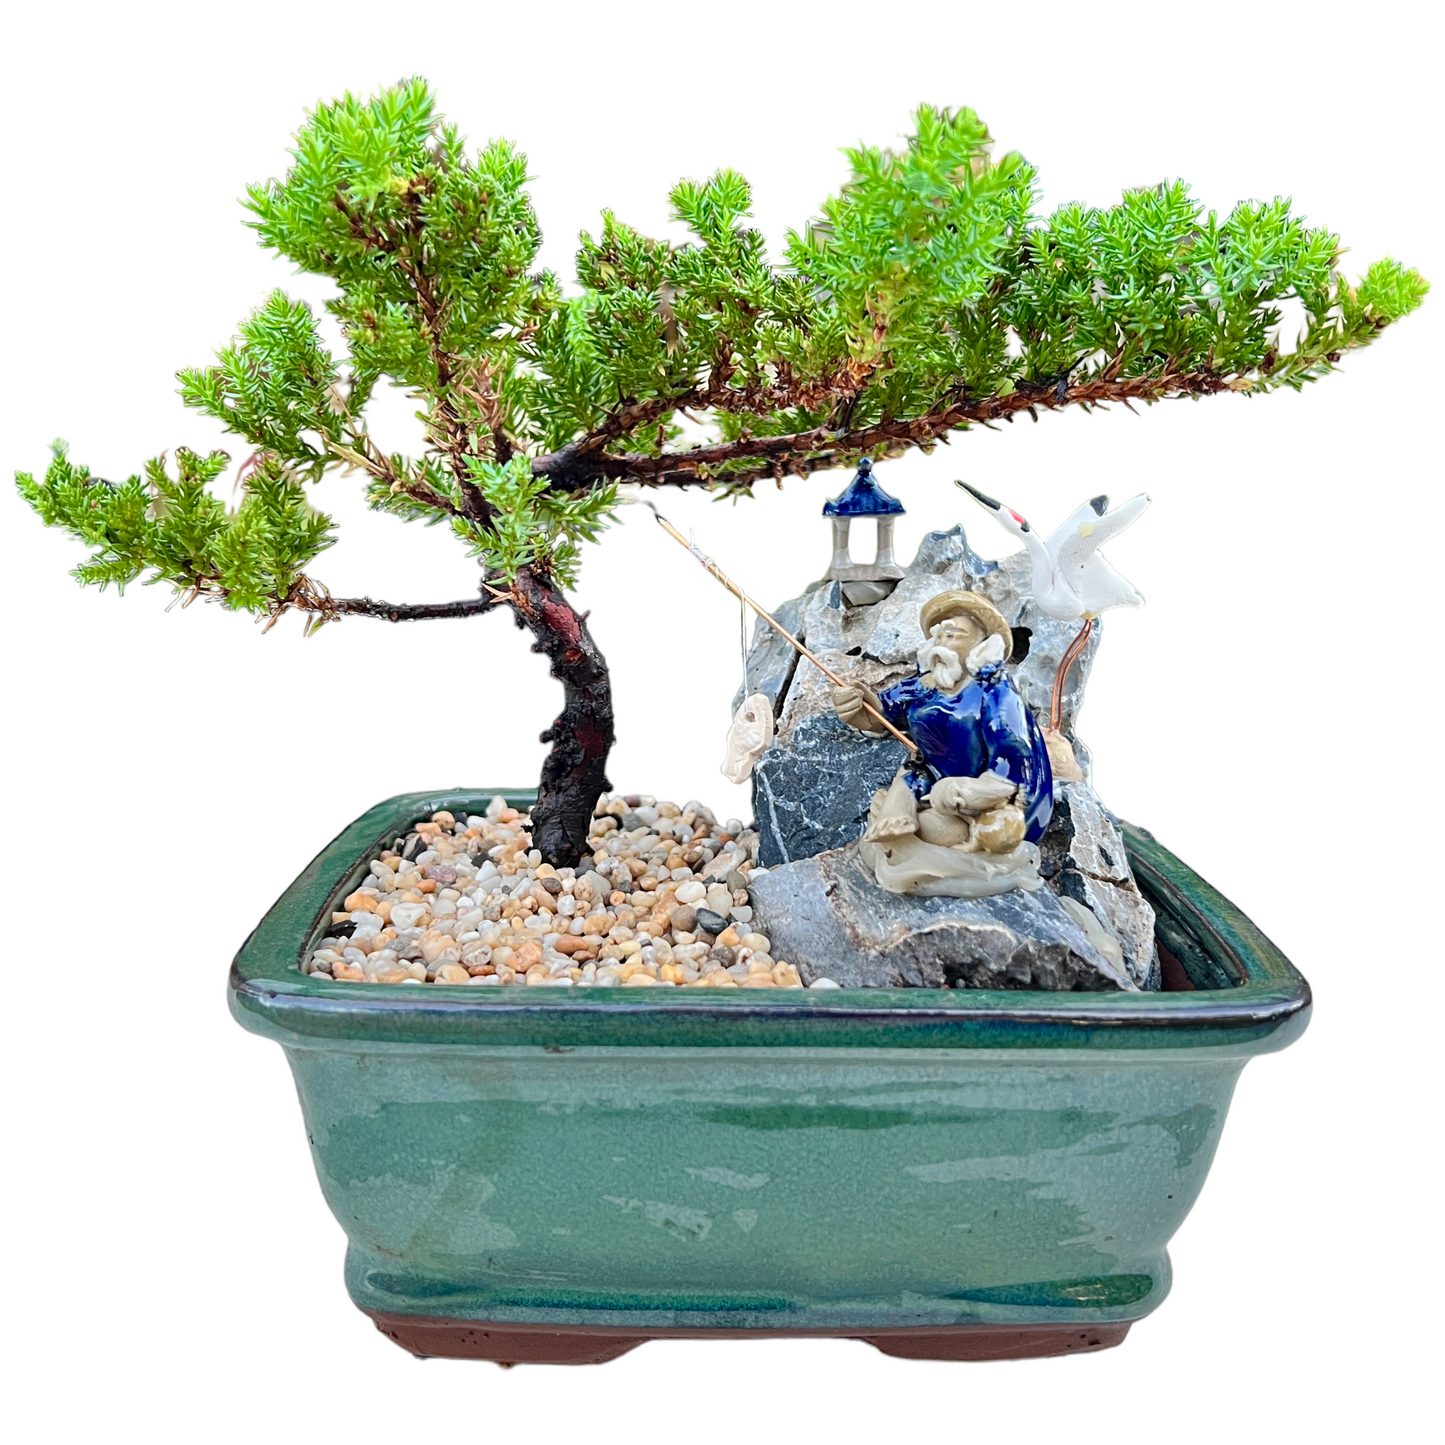 7 Inch Juniper Bonsai Tree With Rock Feature